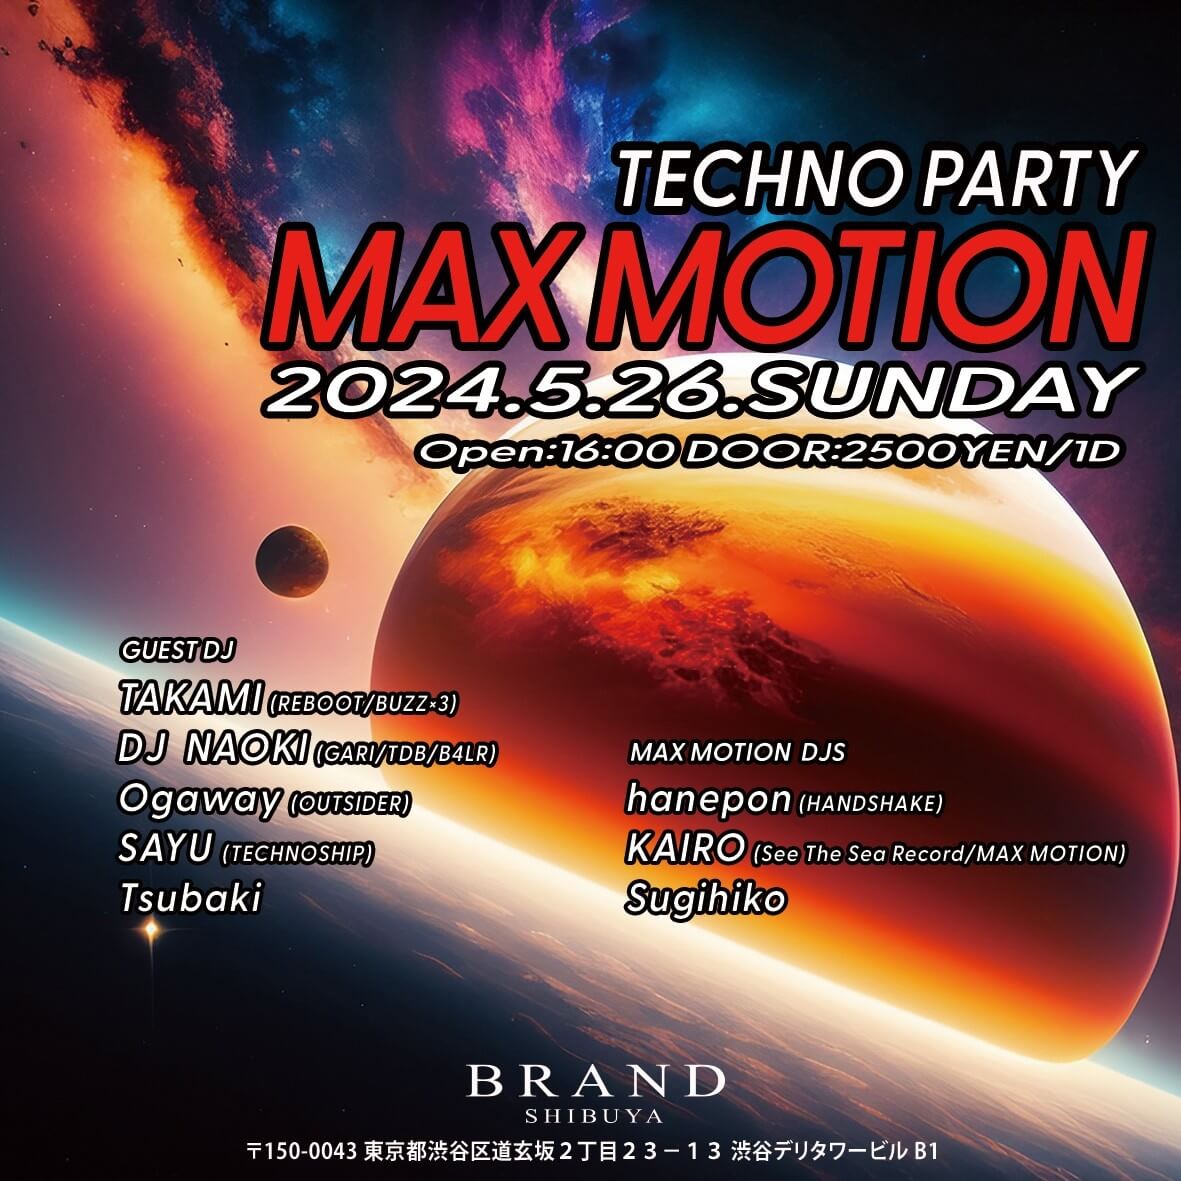 TECHNO PARTY MAXMOTION 2024年05月26日（日曜日）に渋谷 クラブのBRAND SHIBUYAで開催されるTECHNOイベント